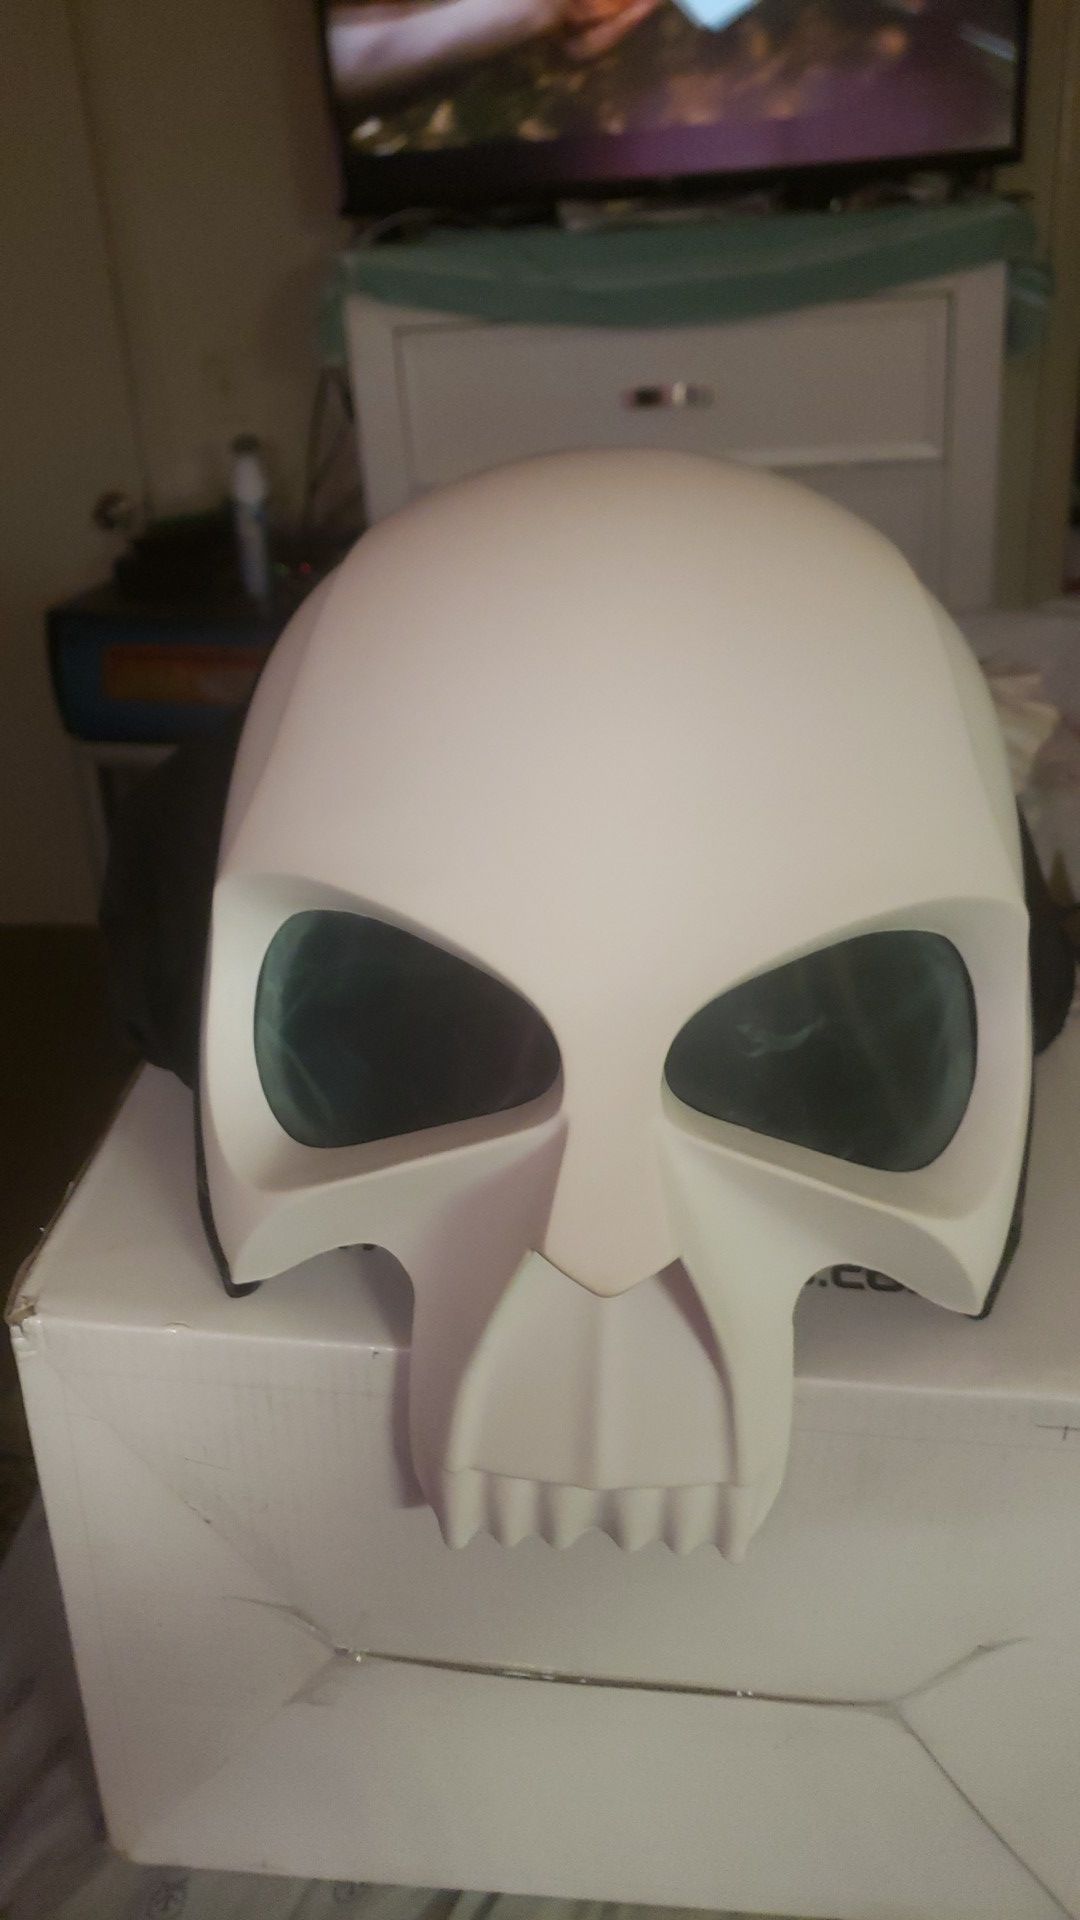 Cool skull helmet